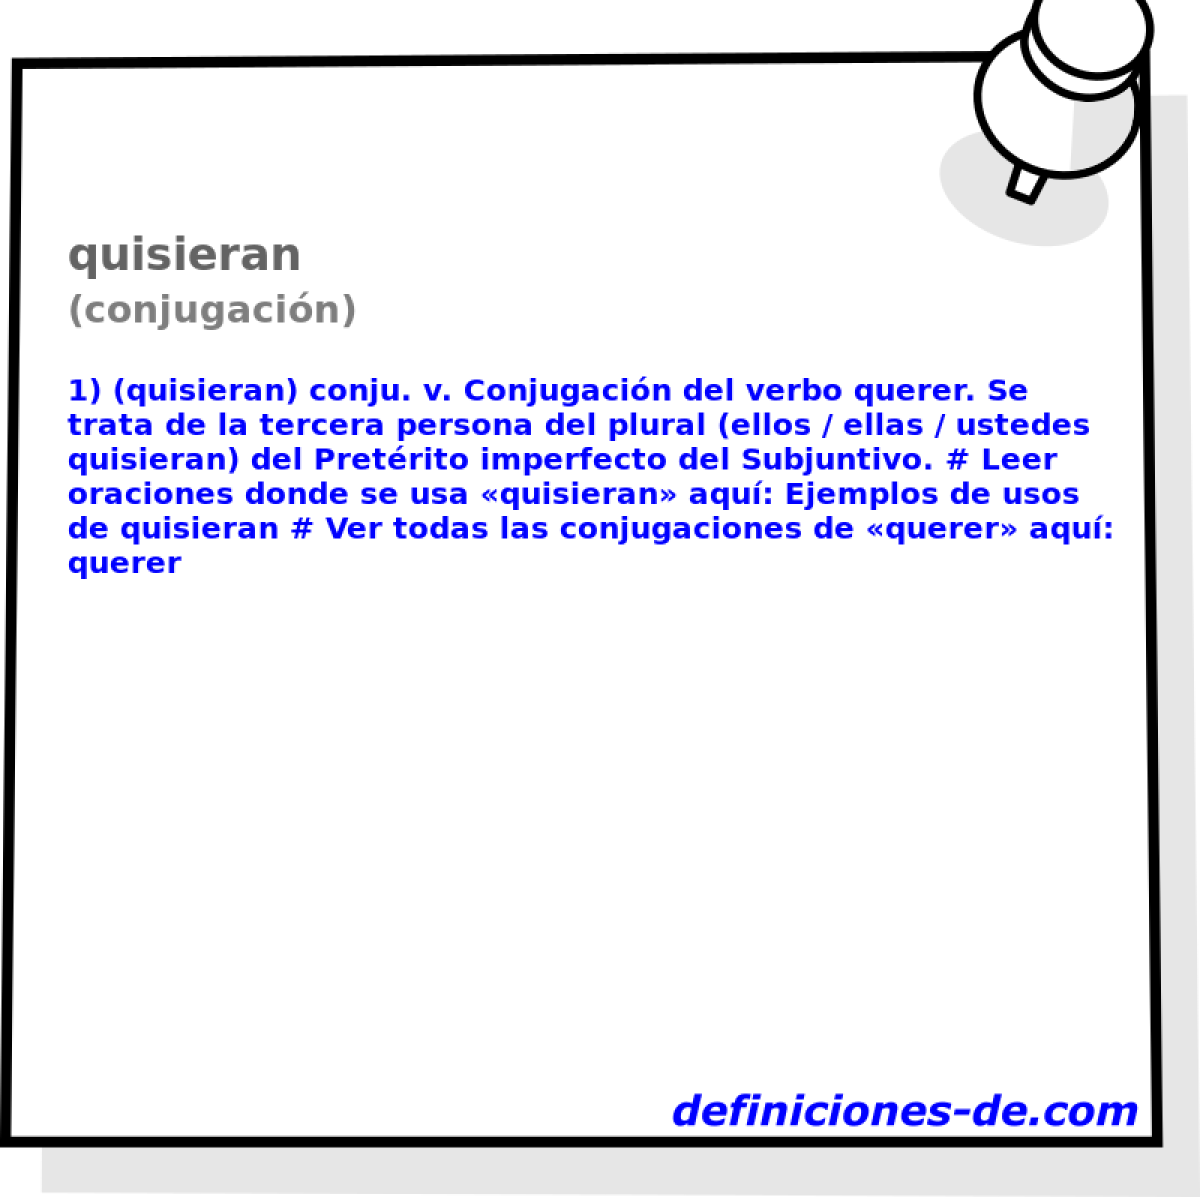 quisieran (conjugacin)